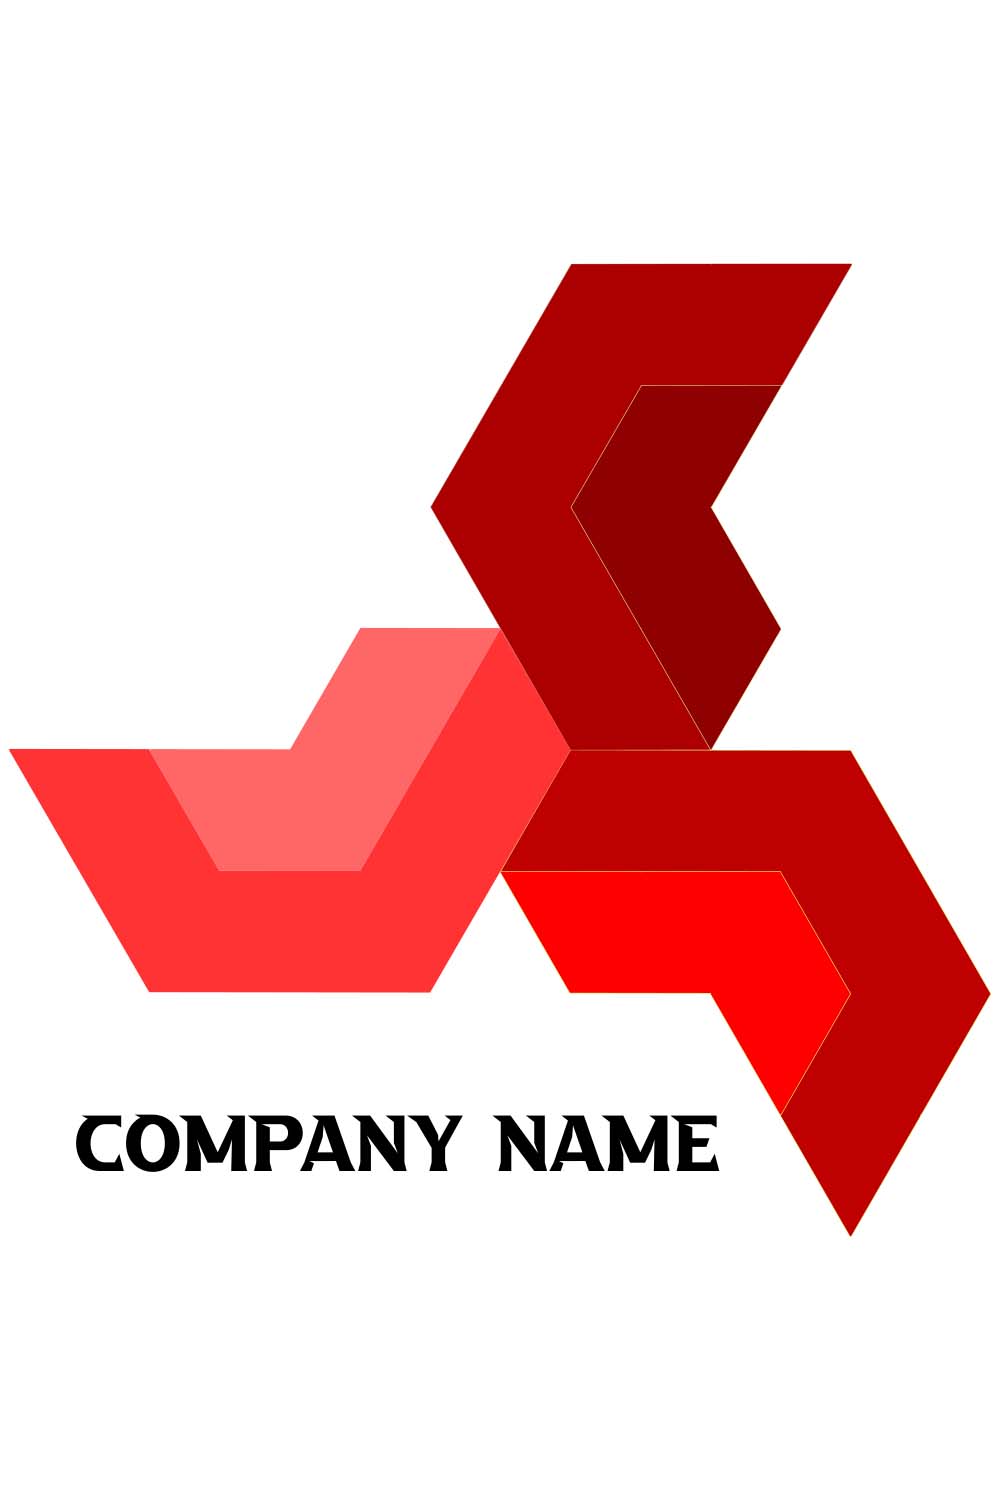 company logo design in illustrator pinterest preview image.